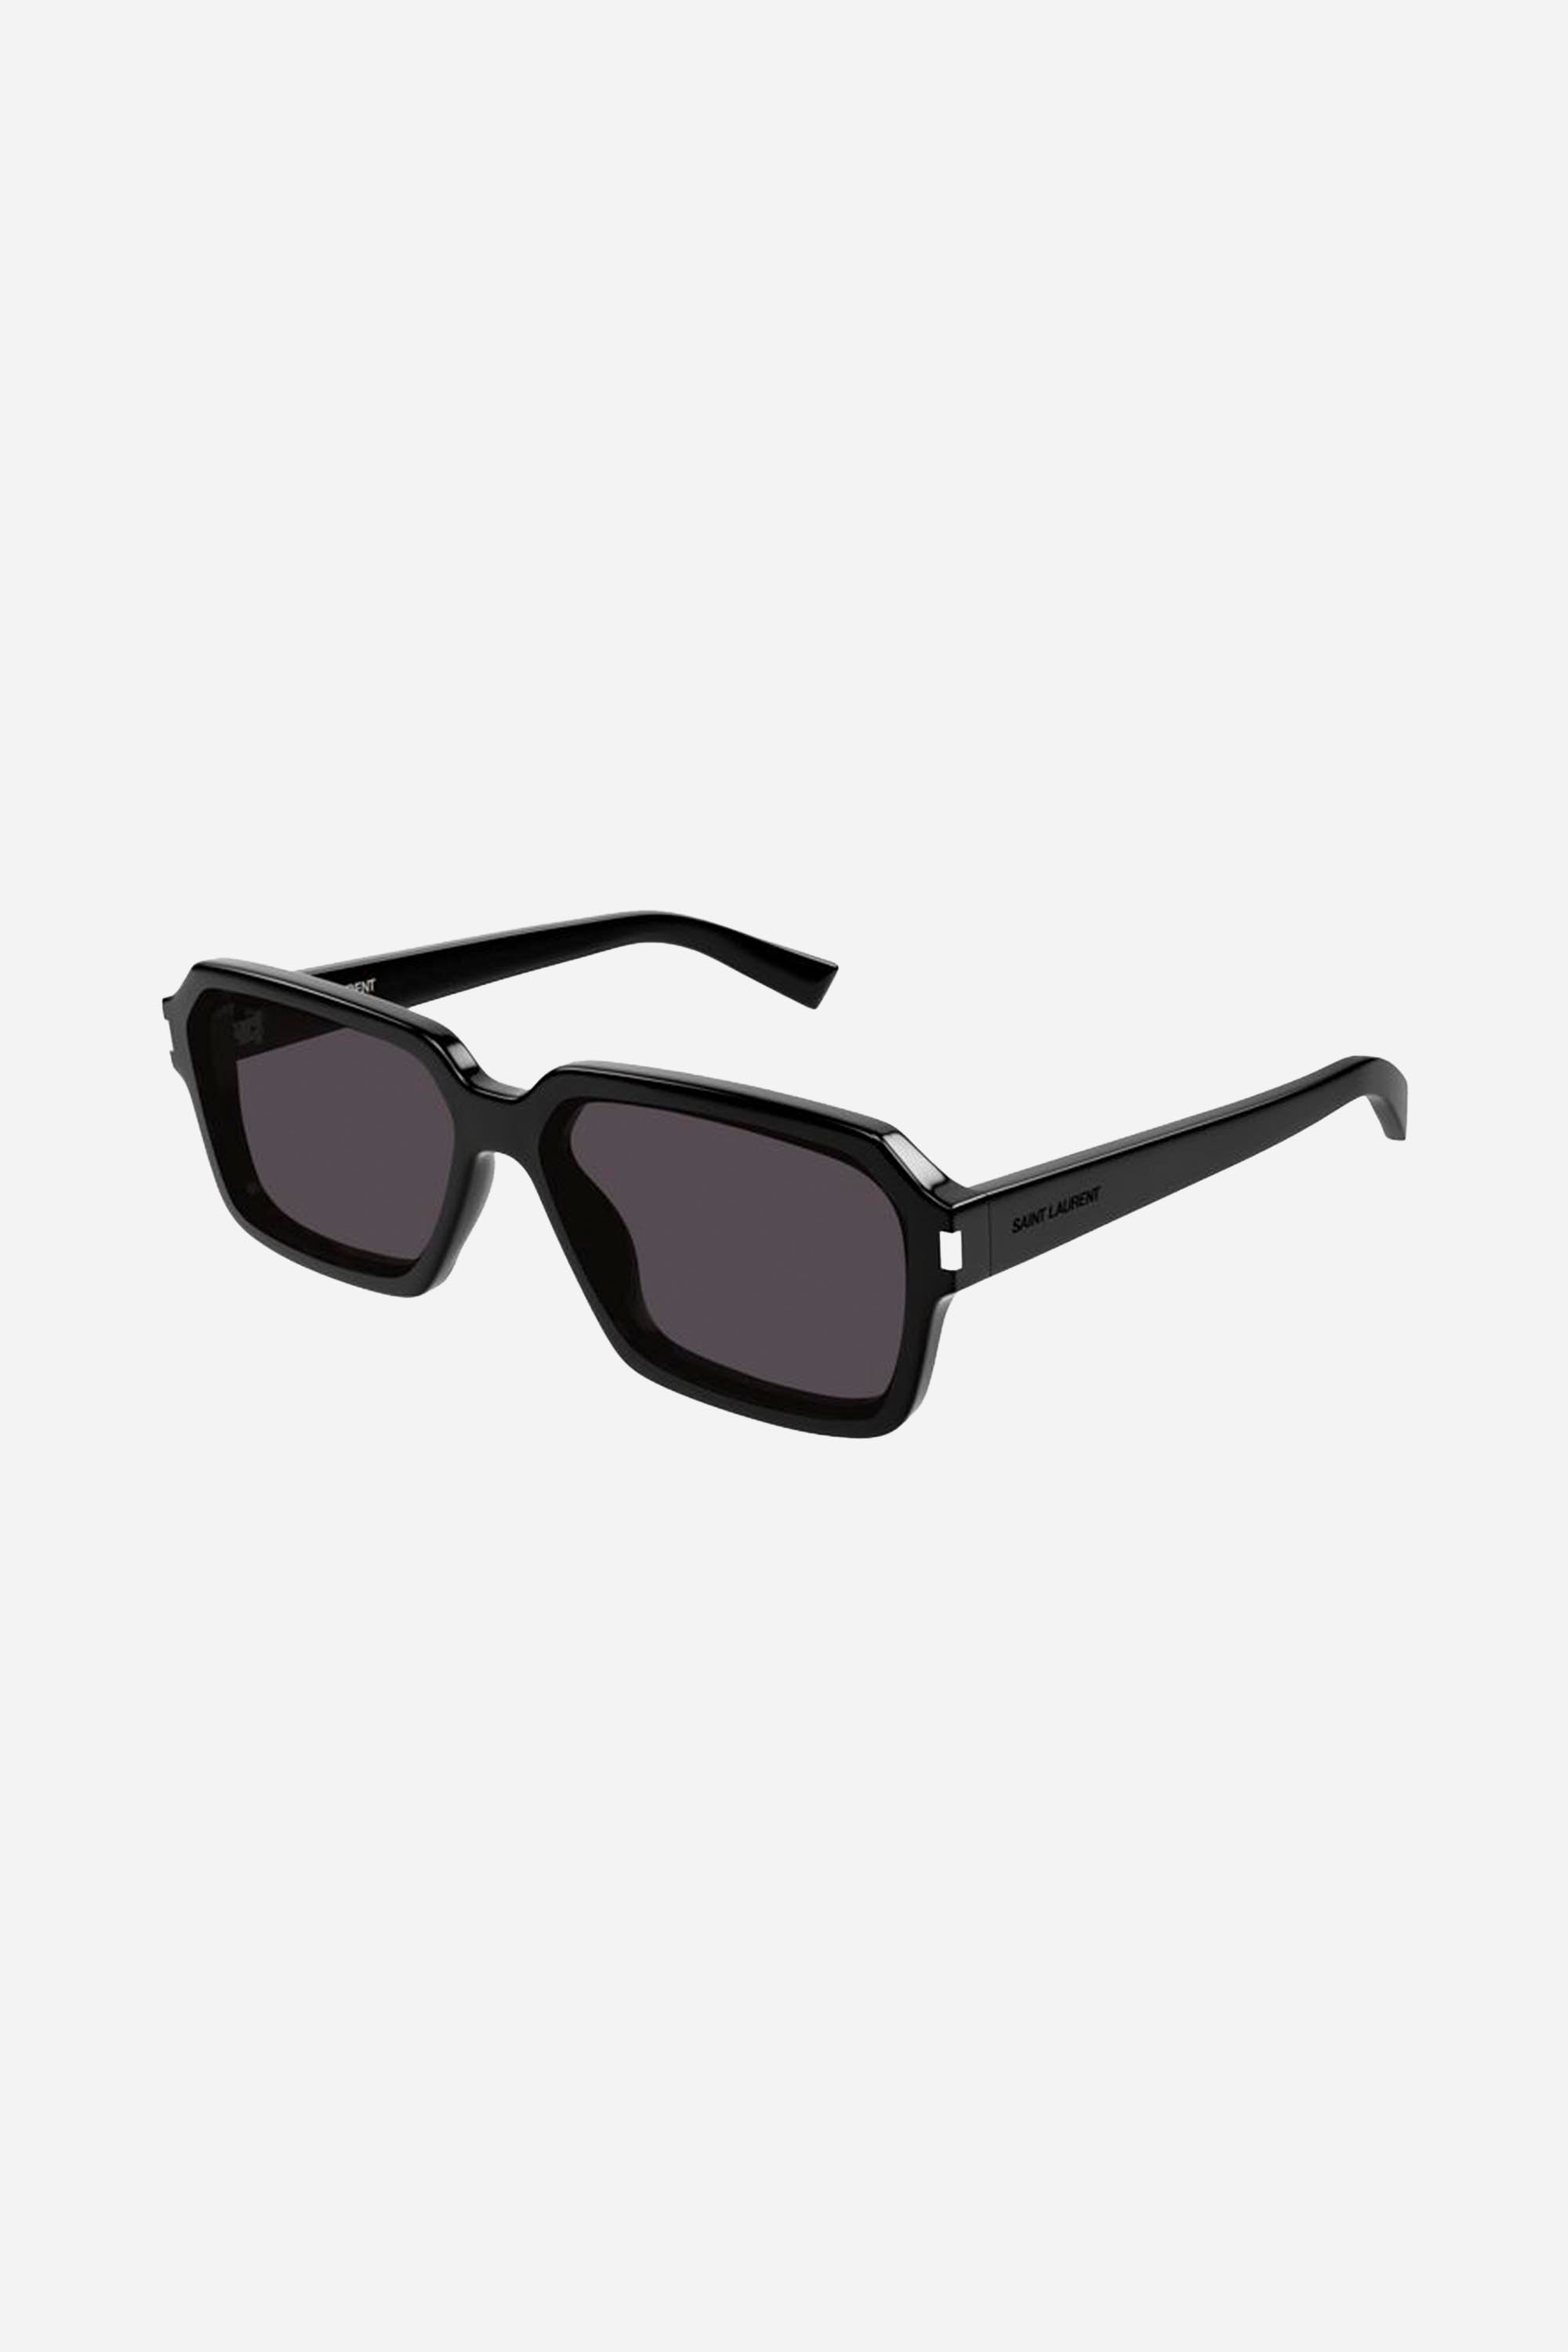 Saint Laurent SL 611/F squared black sunglasses - Eyewear Club